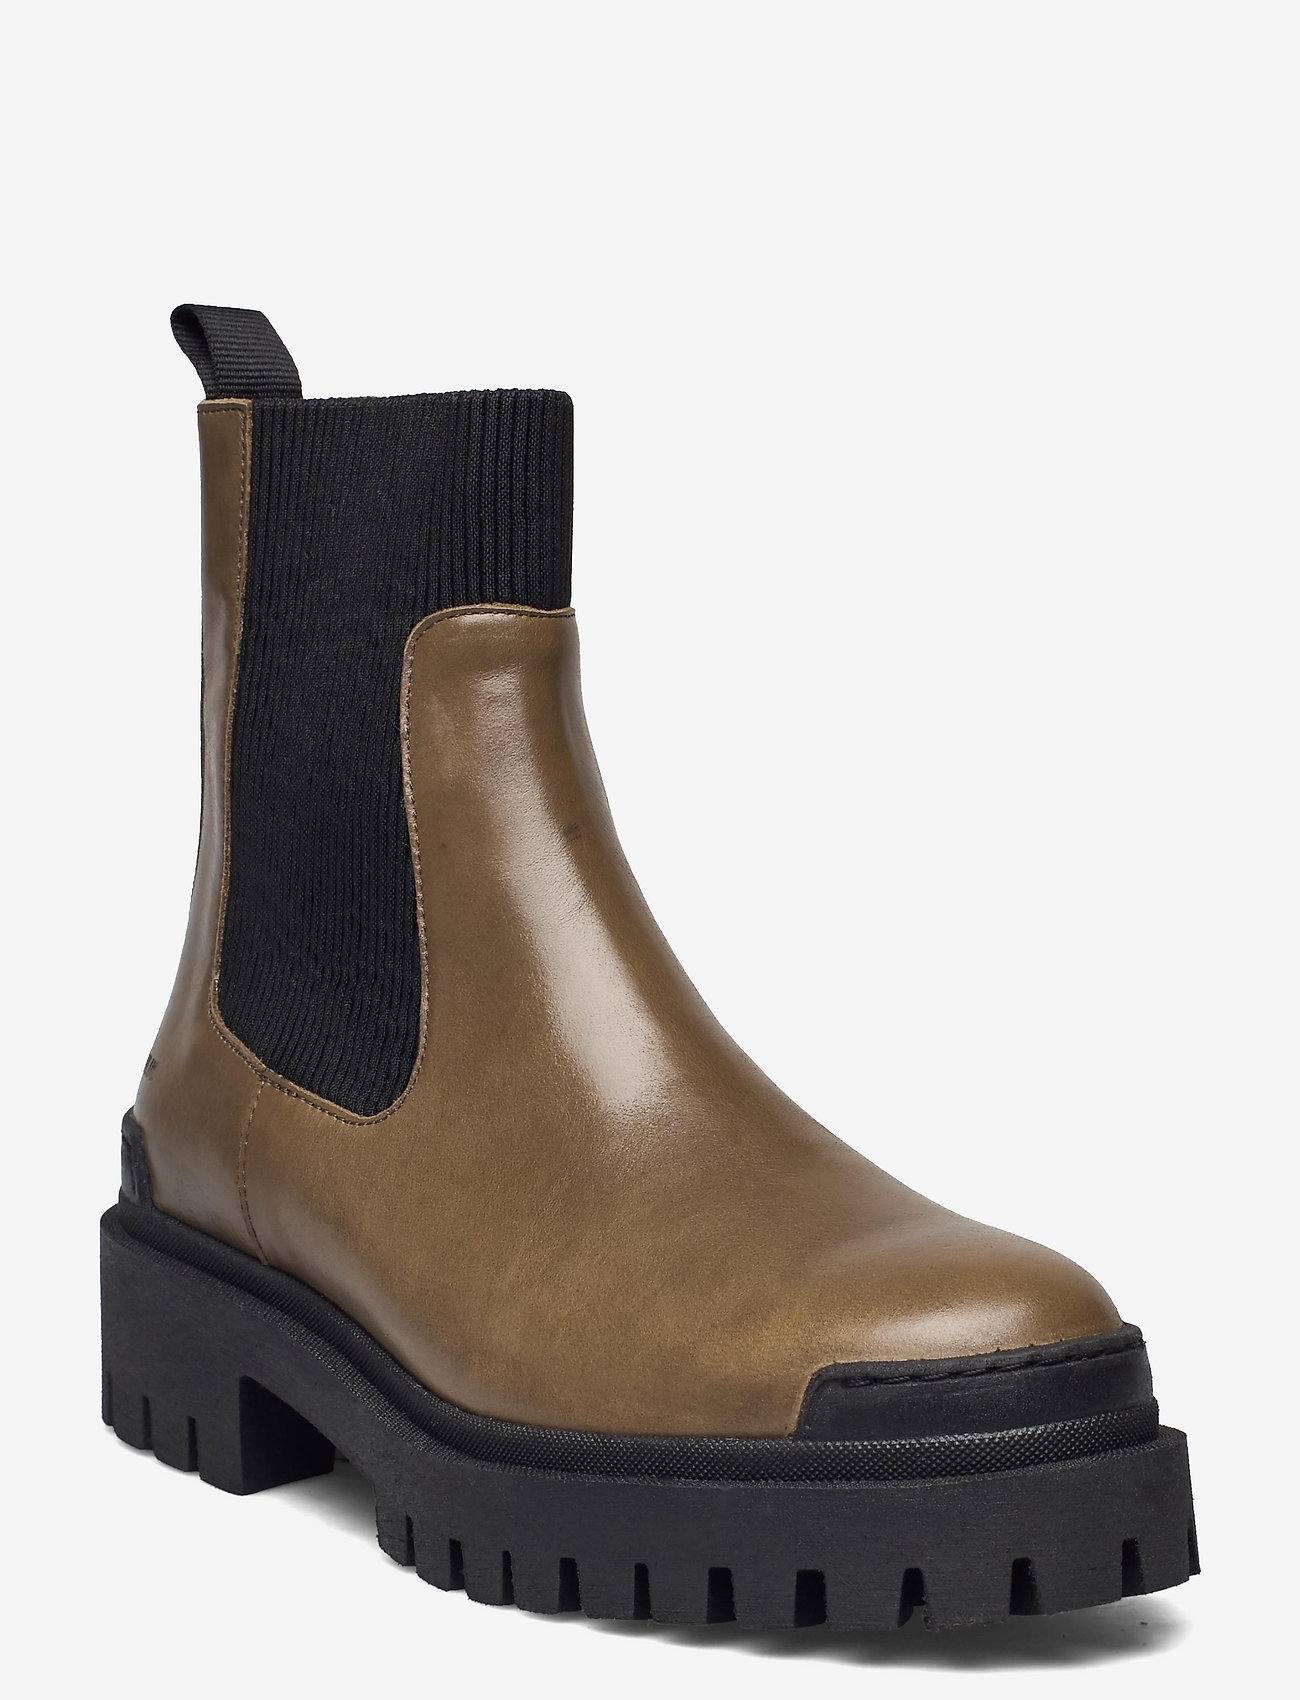 ANGULUS - Boots - flat - chelsea boots - 1841/019 dark olive/black - 0